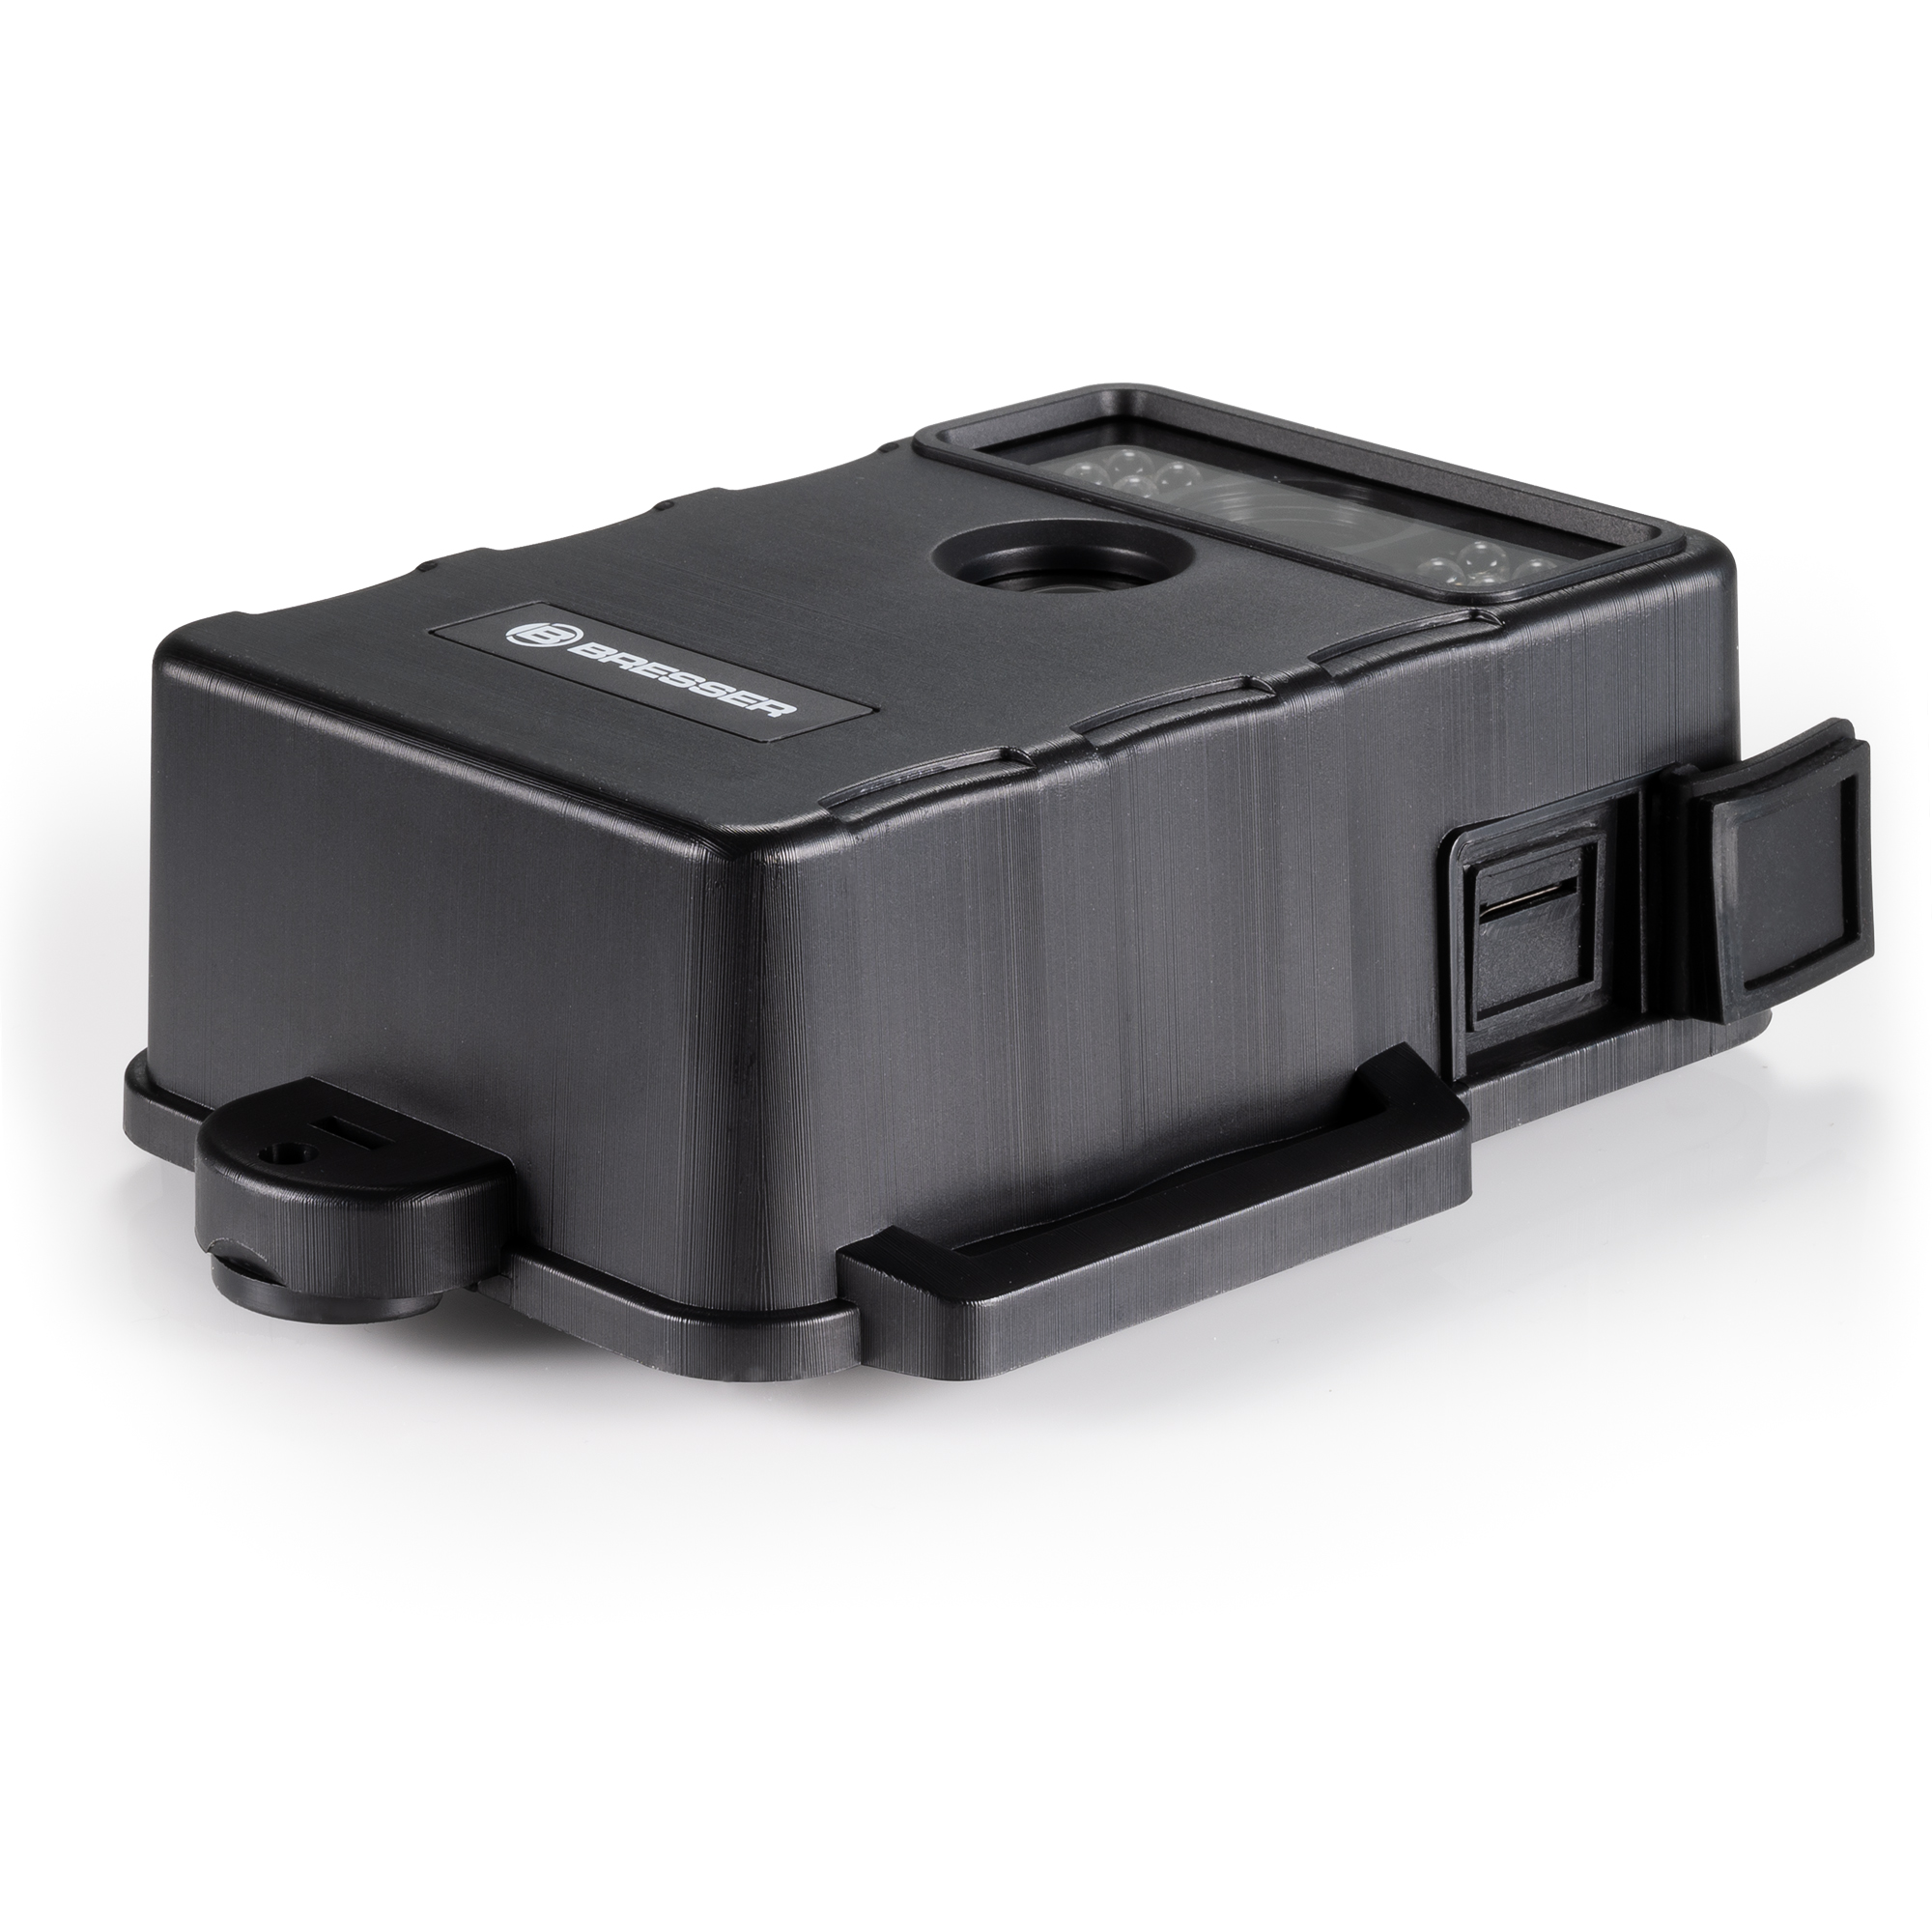 BRESSER Wildkamera 5 MP Full-HD mit PIR-Bewegungssensor